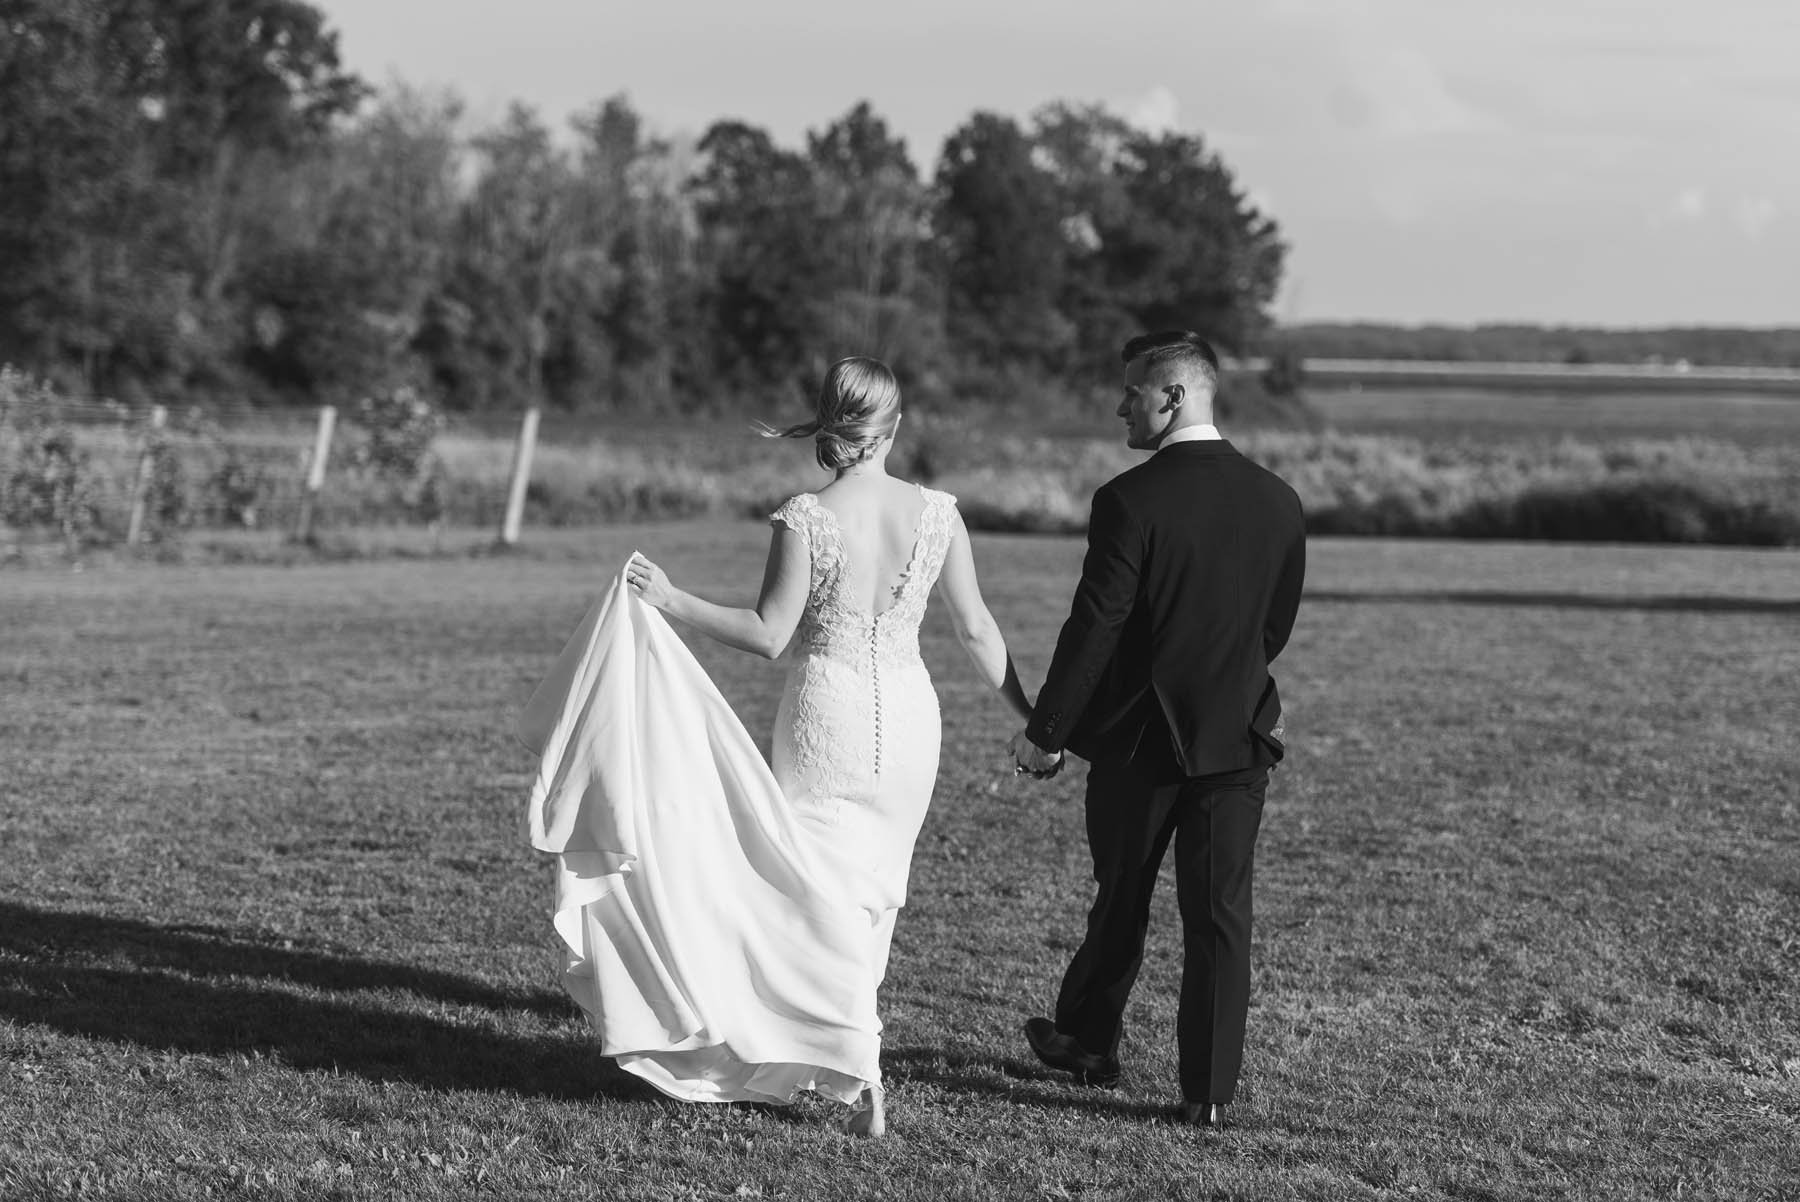 Magical Wedding Photography by a Seasoned Photographer - Samantha + Tyler